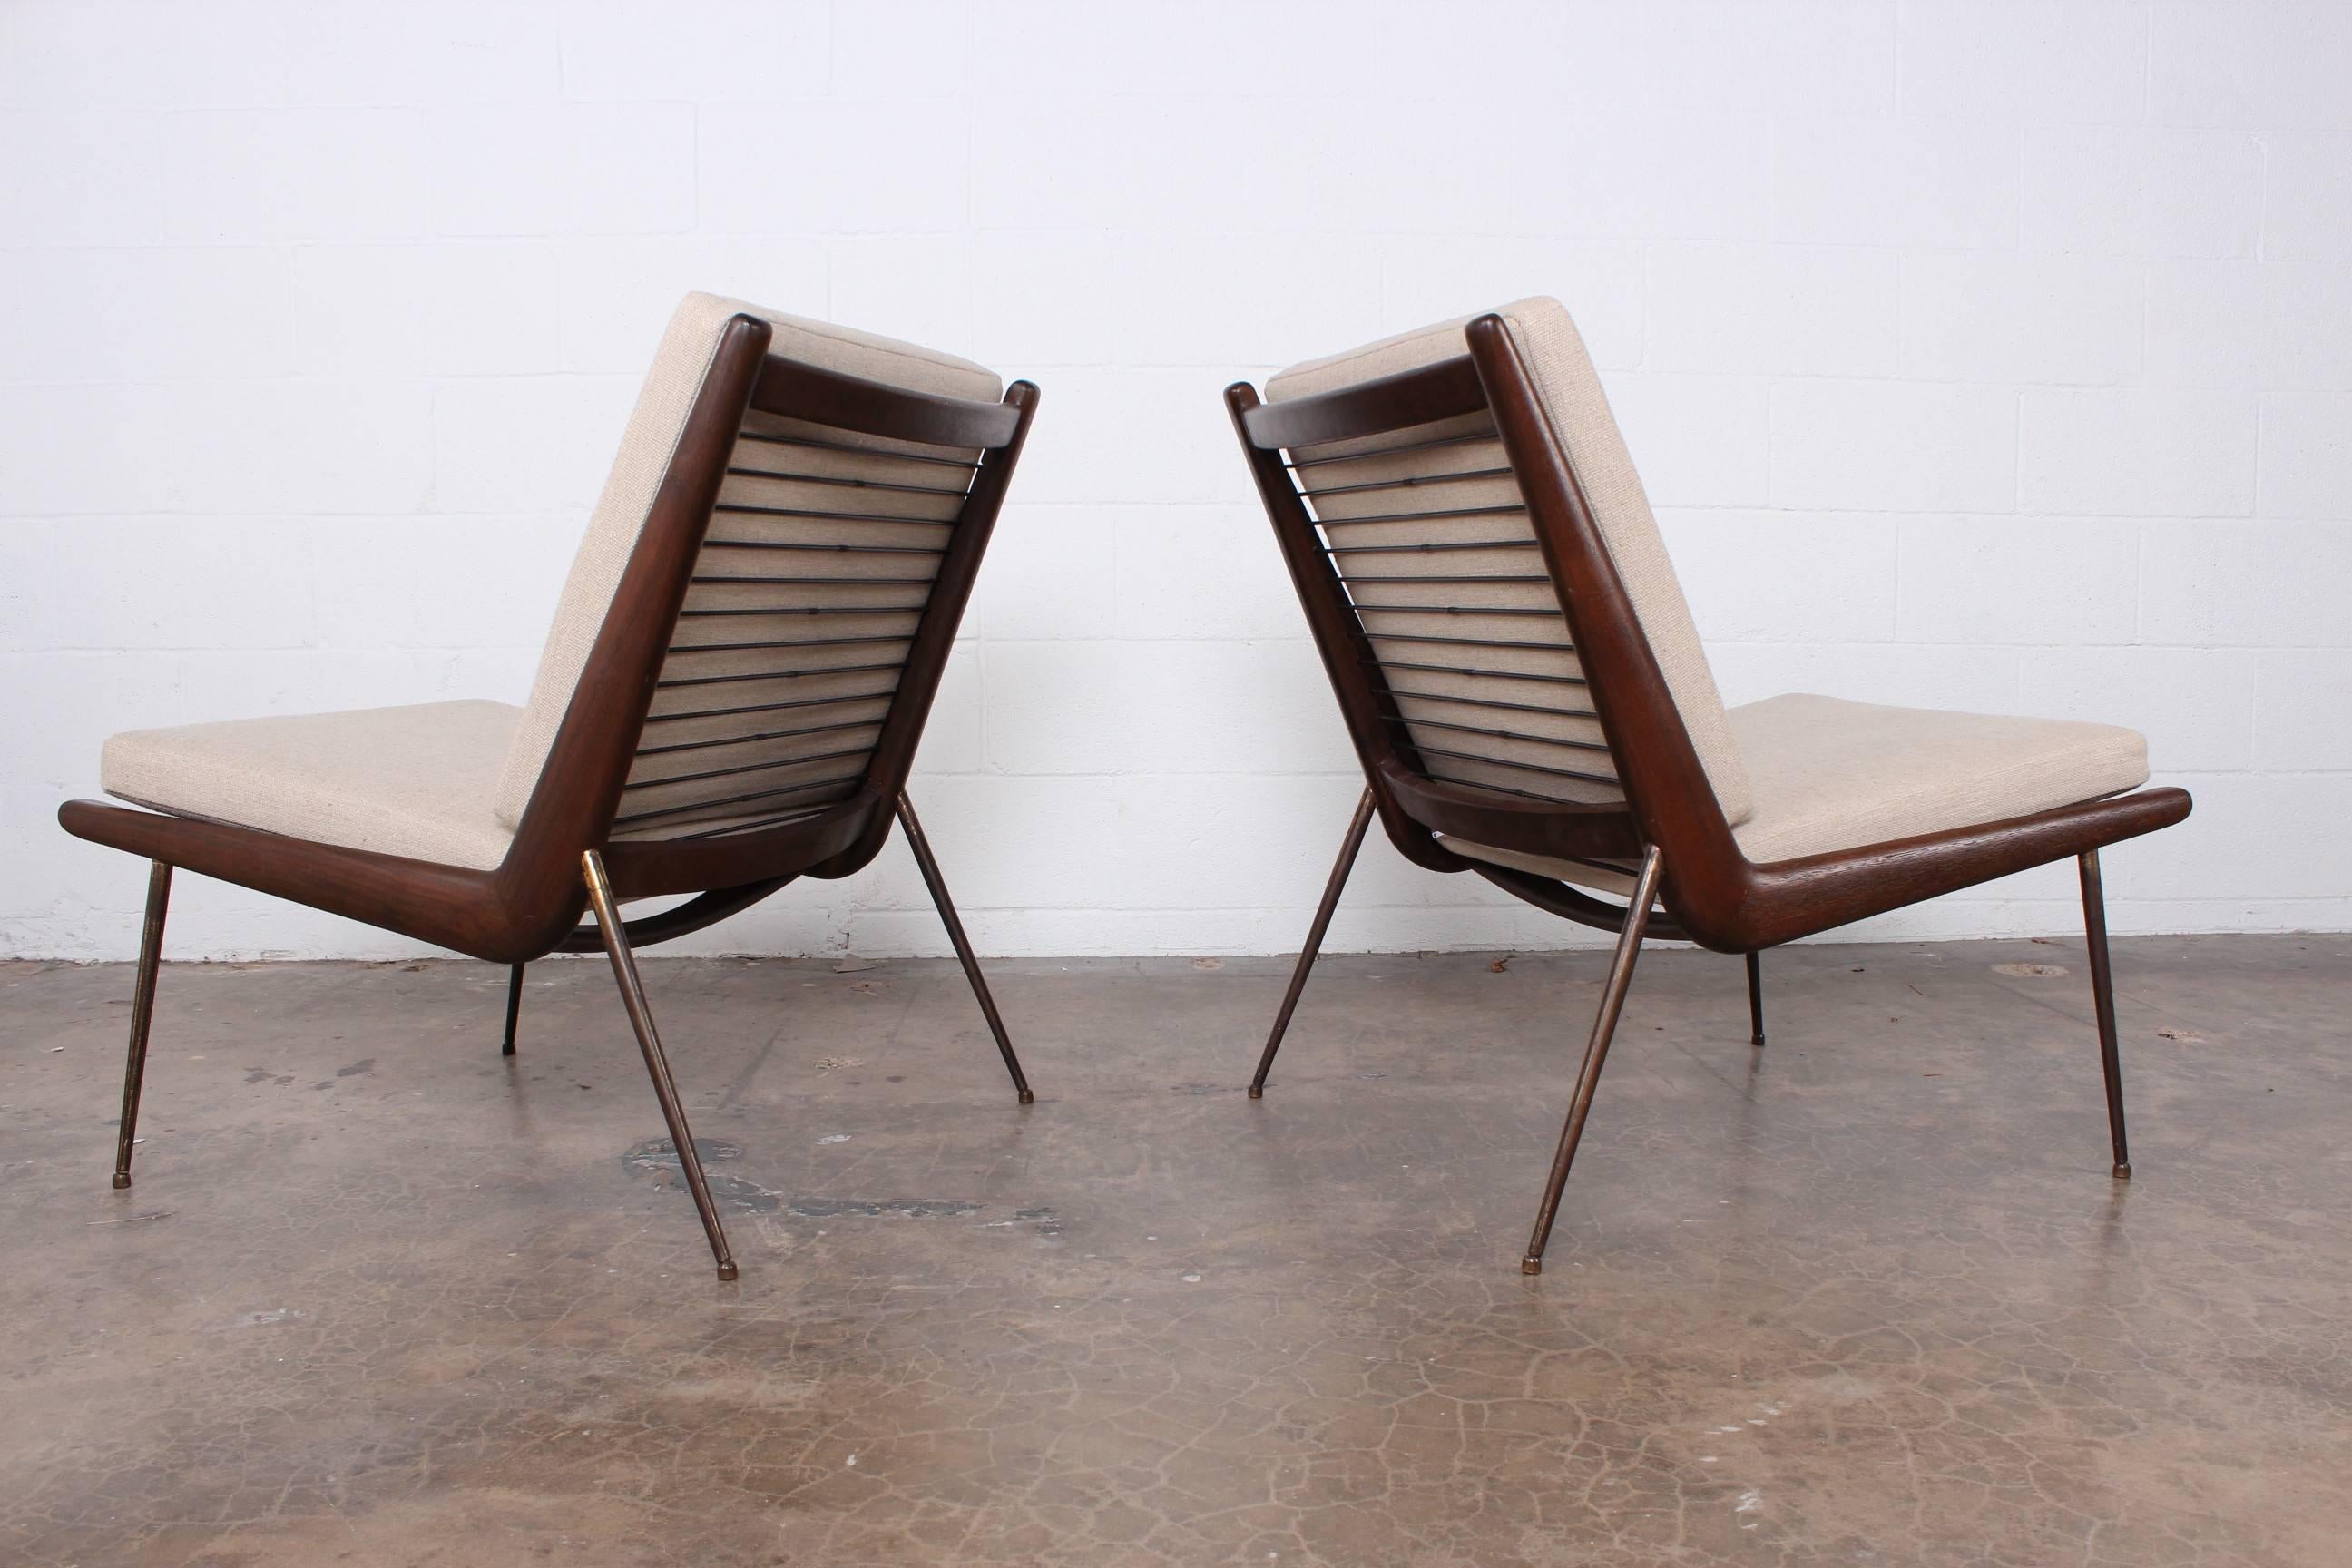 A pair of brass legged slipper chair designed by Peter Hvidt and Orla Mølgaard-Nielsen.